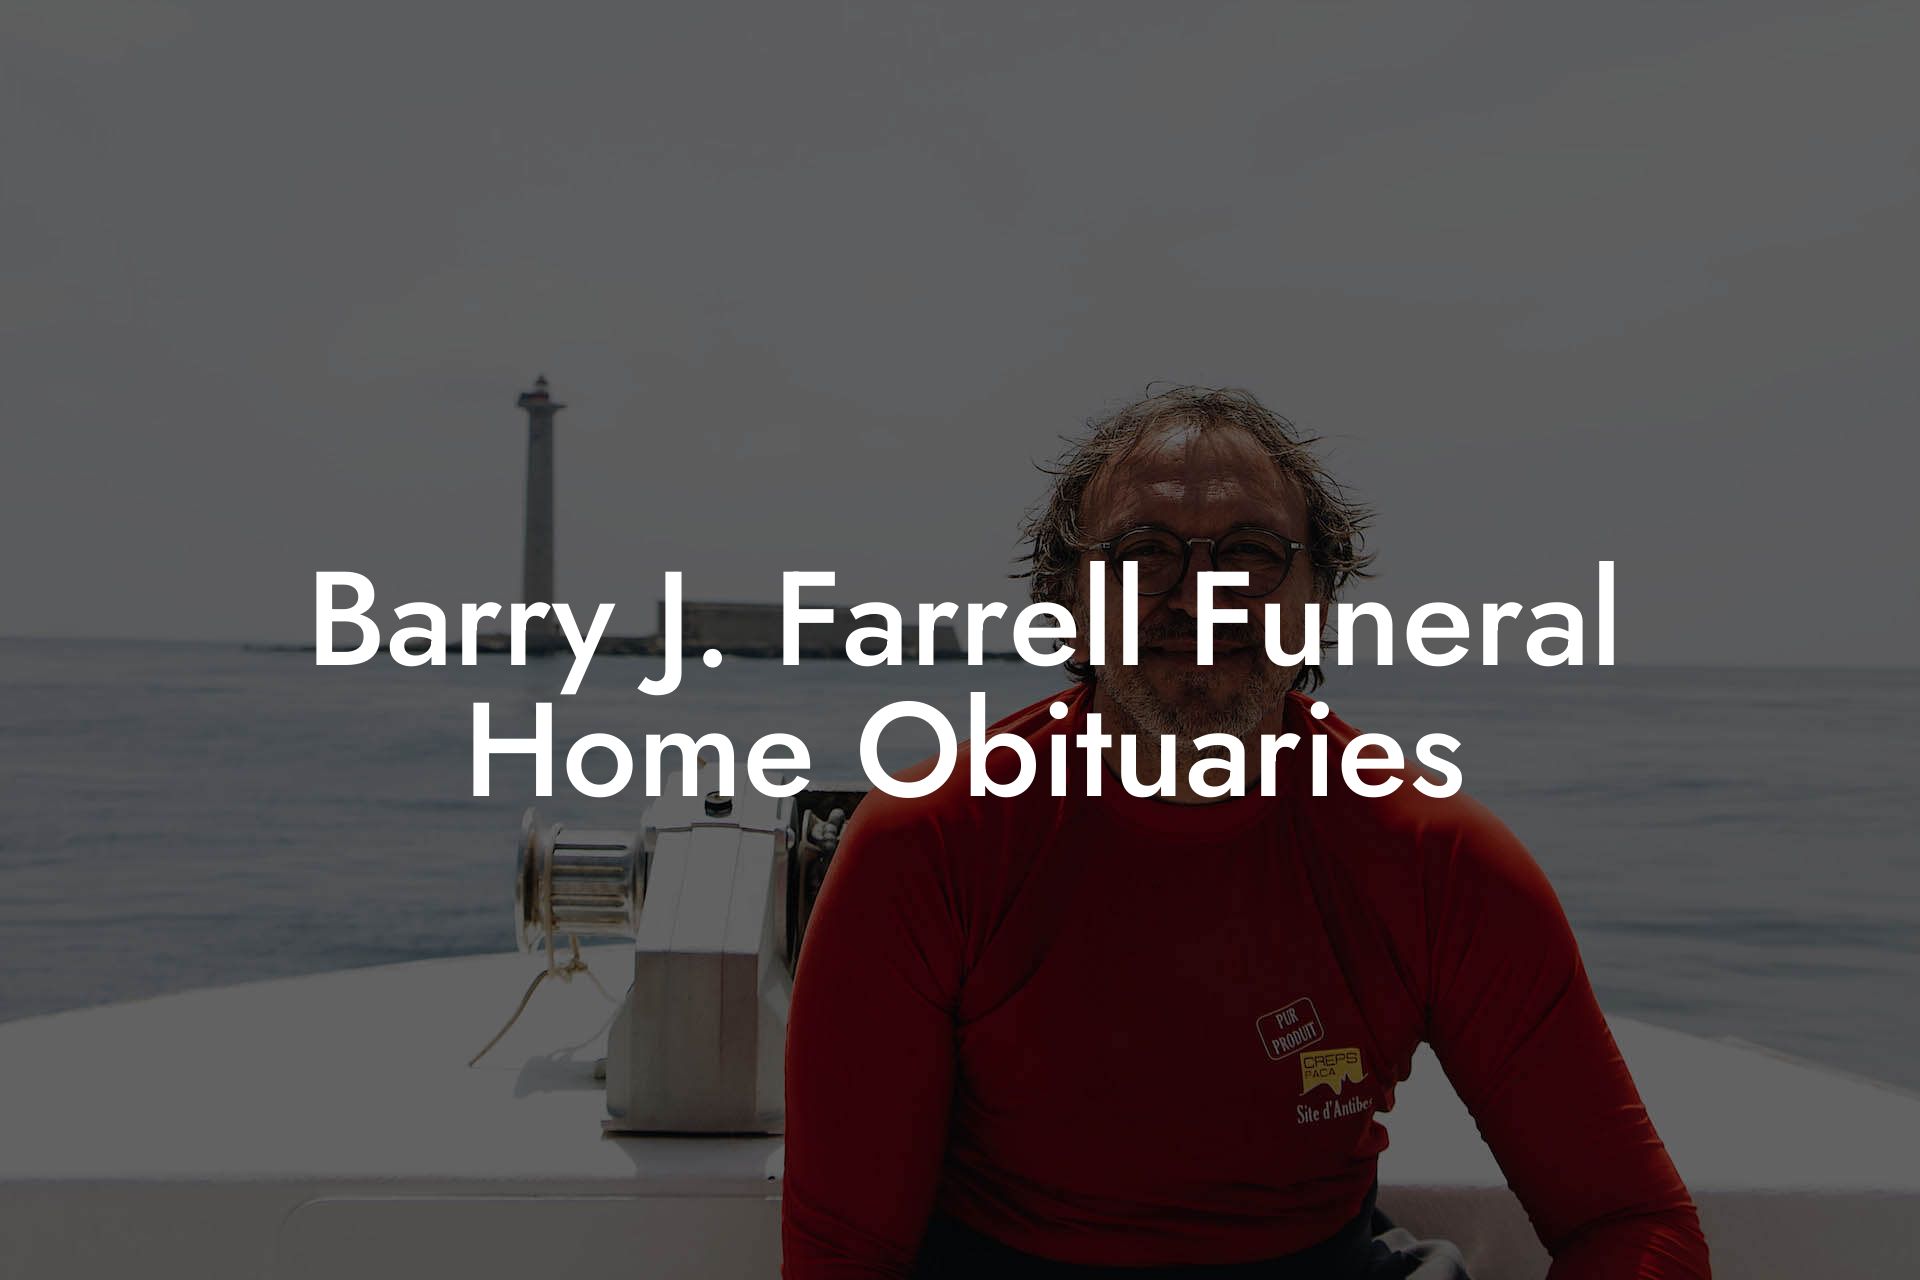 Barry J. Farrell Funeral Home Obituaries